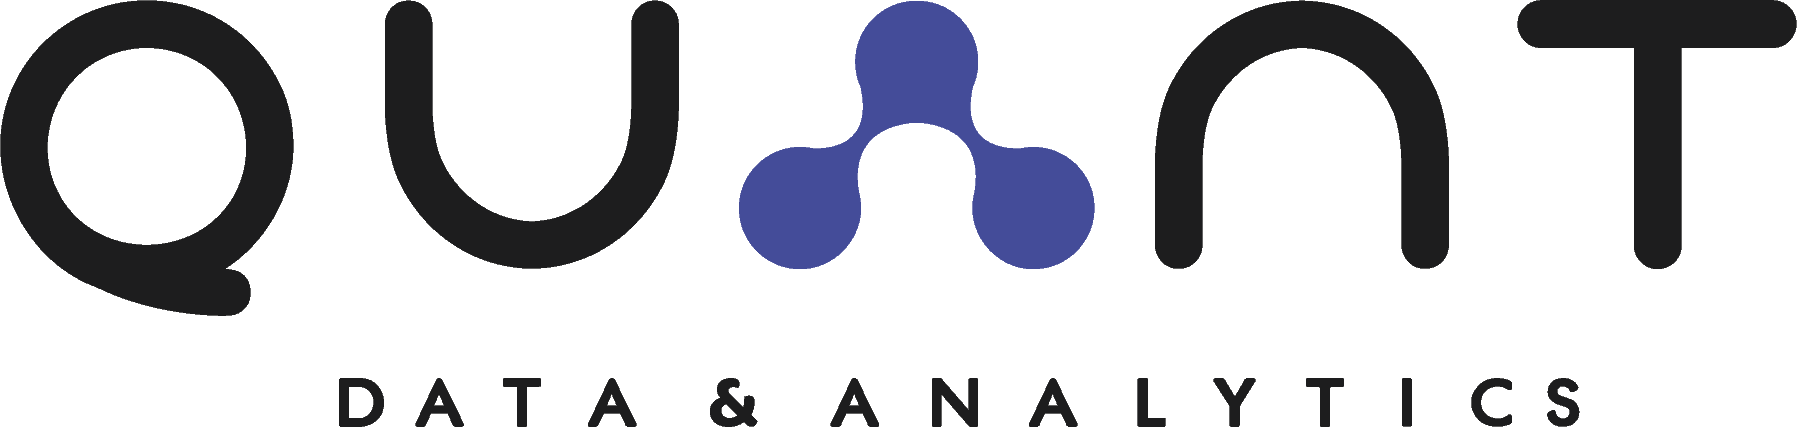 Sponser Company Logo